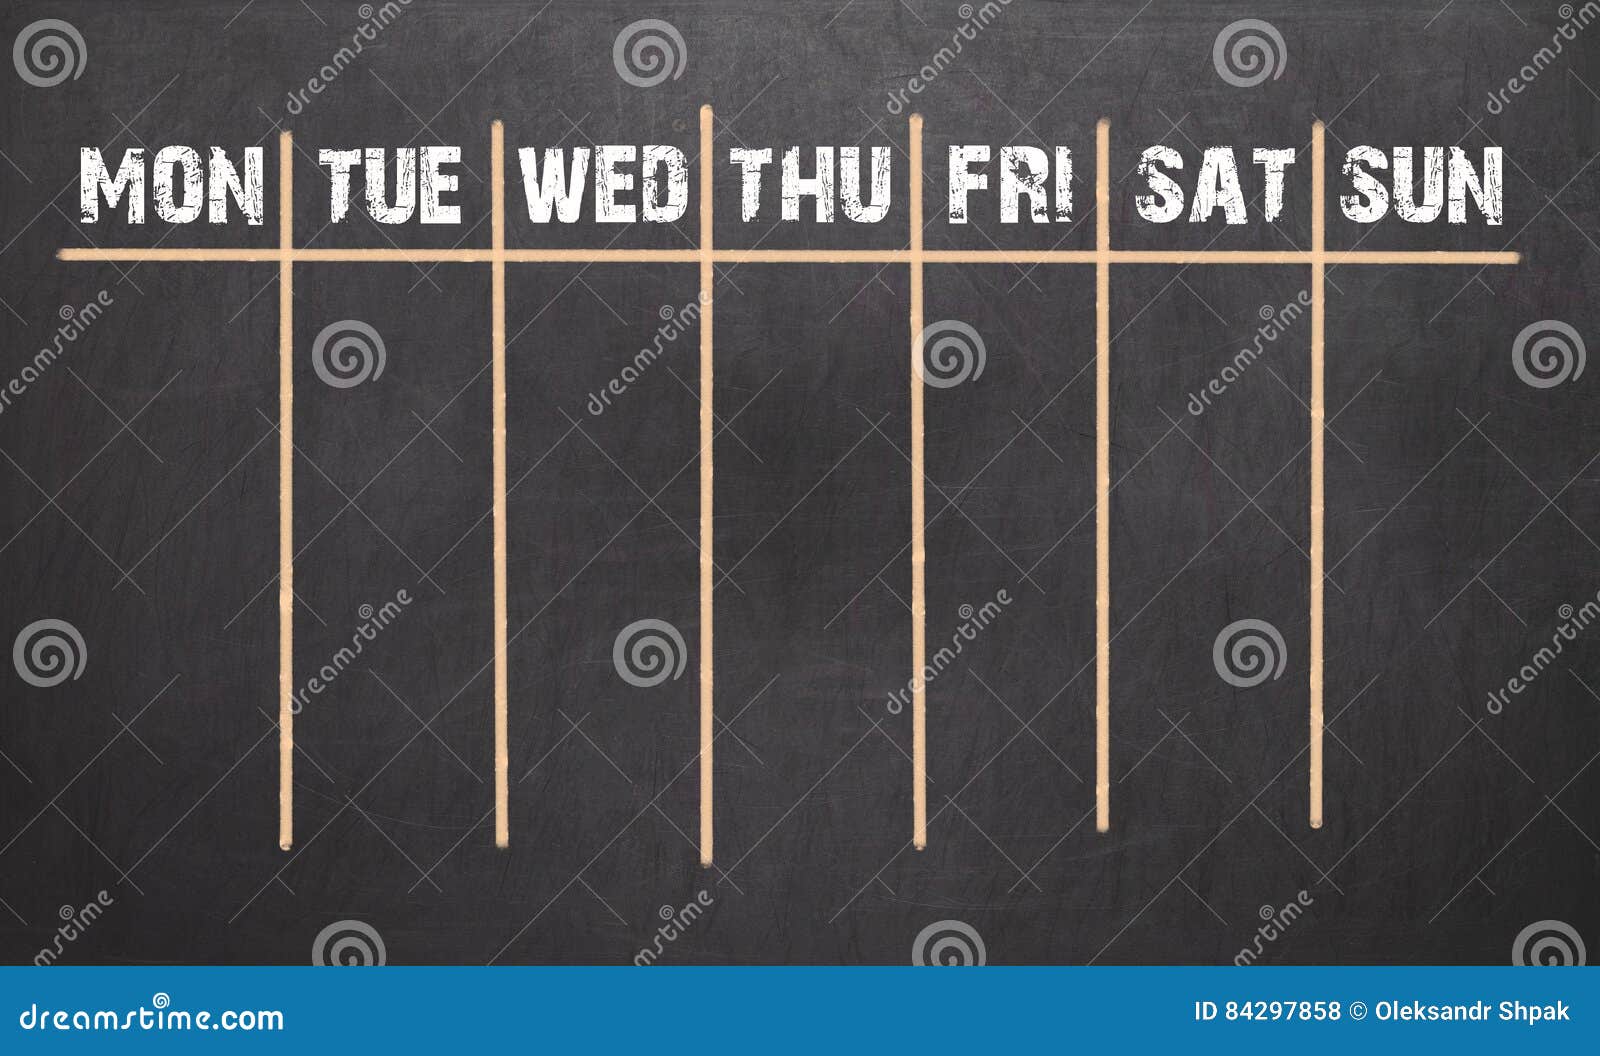 weekly calendar on chalkboard background